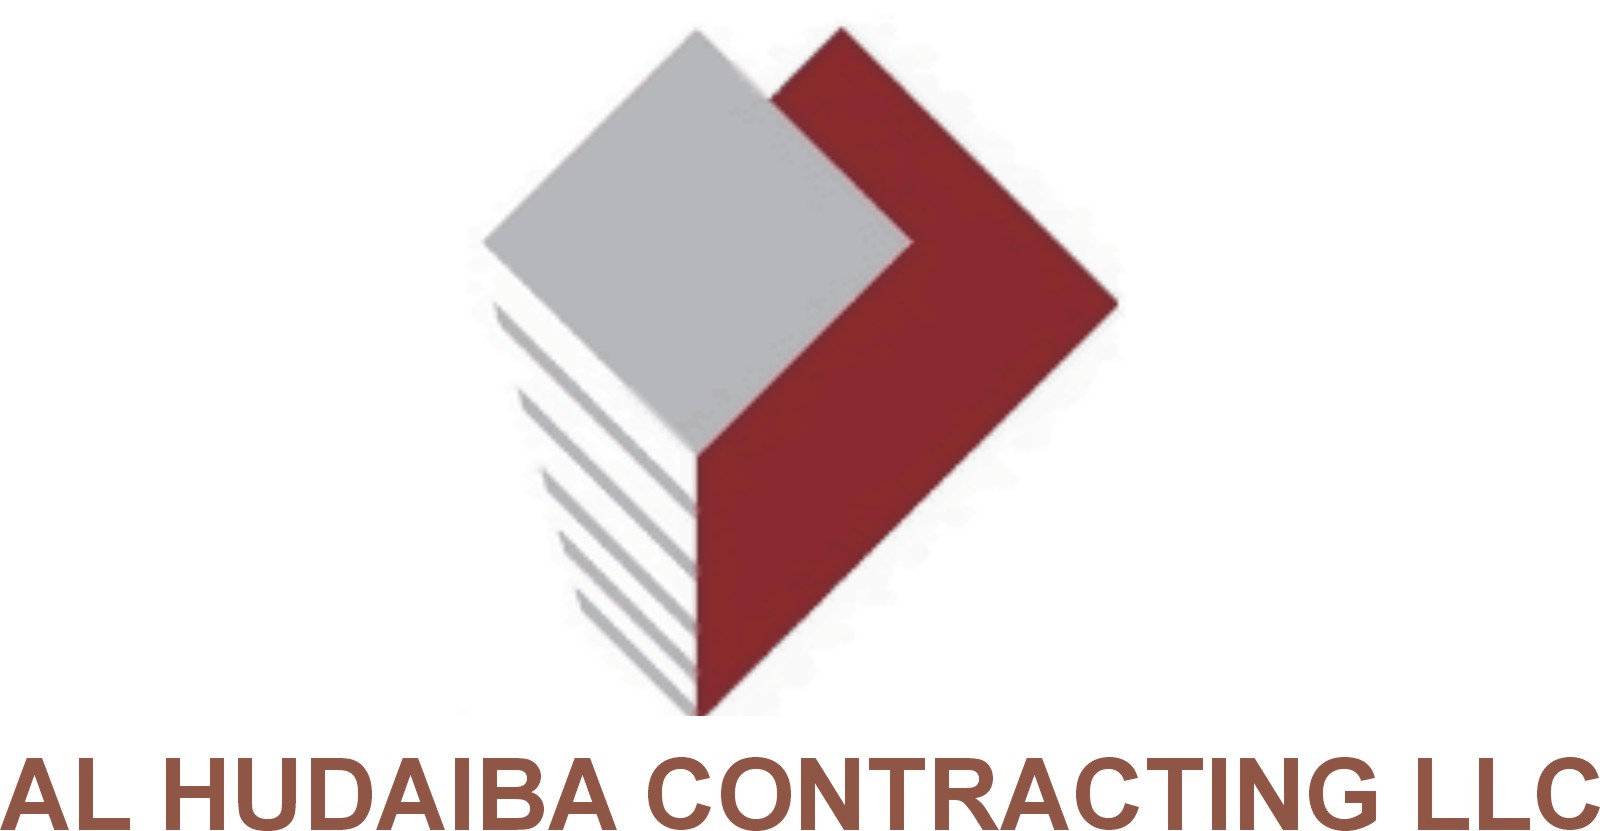 AL HUDAIBA CONTRACTING LLC Dubai, UAE